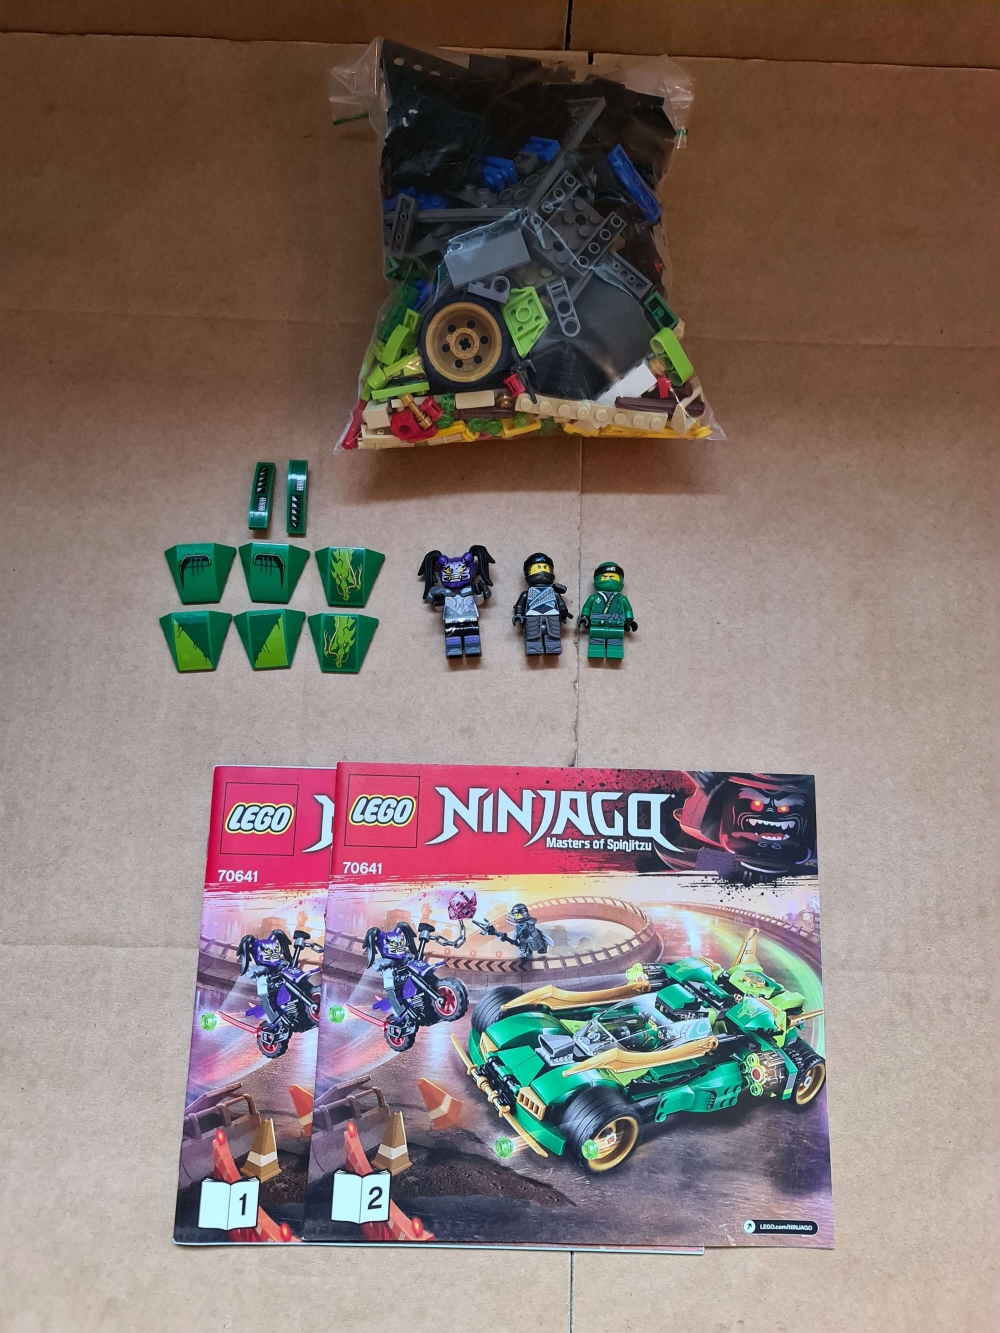 Sett 70641 fra Lego Ninjago : Sons of Garmadon serien.
Meget pent. Som nytt.
Komplett med manualer.